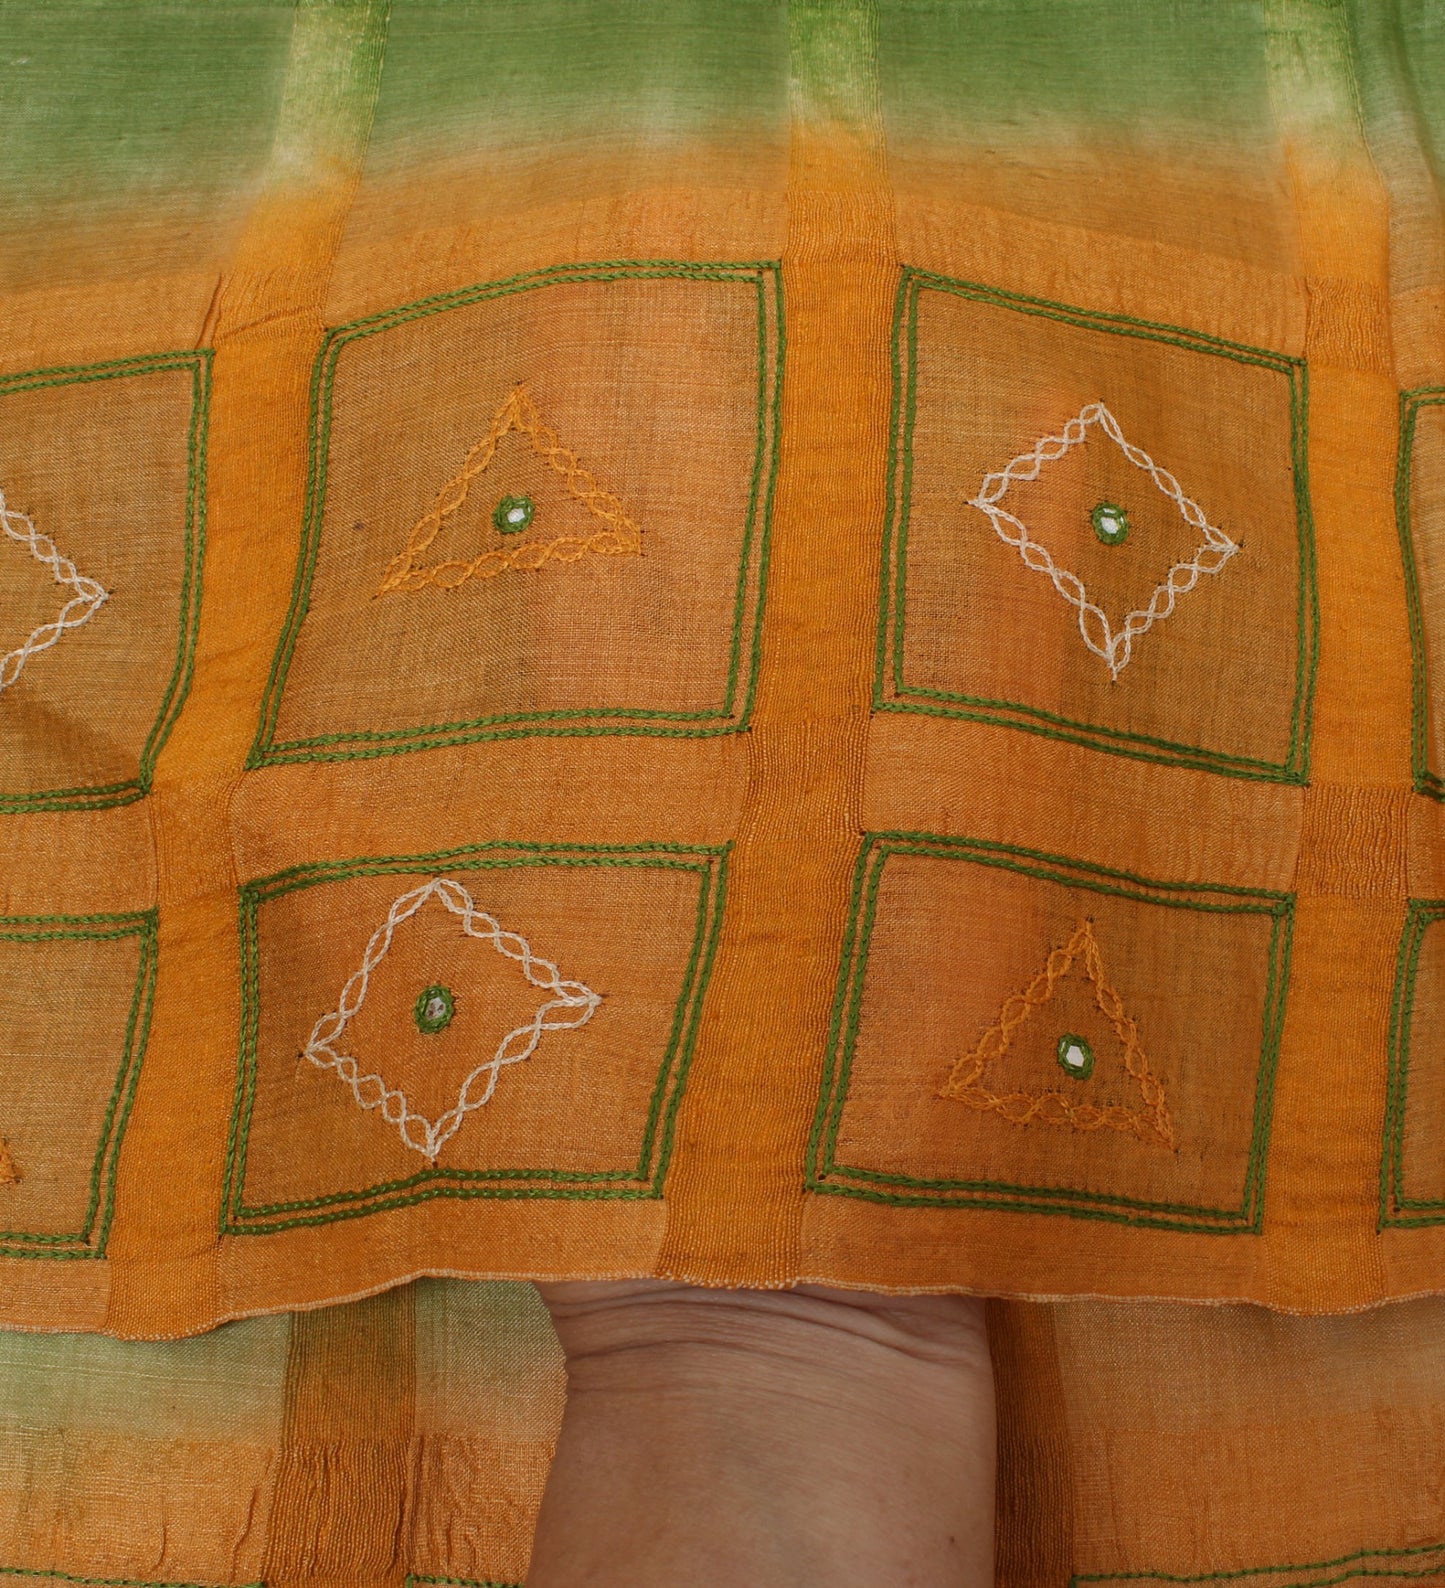 Sushila Vintage Green Saree 100% Pure Silk Embroidered Woven Sari 5 Yard Fabric